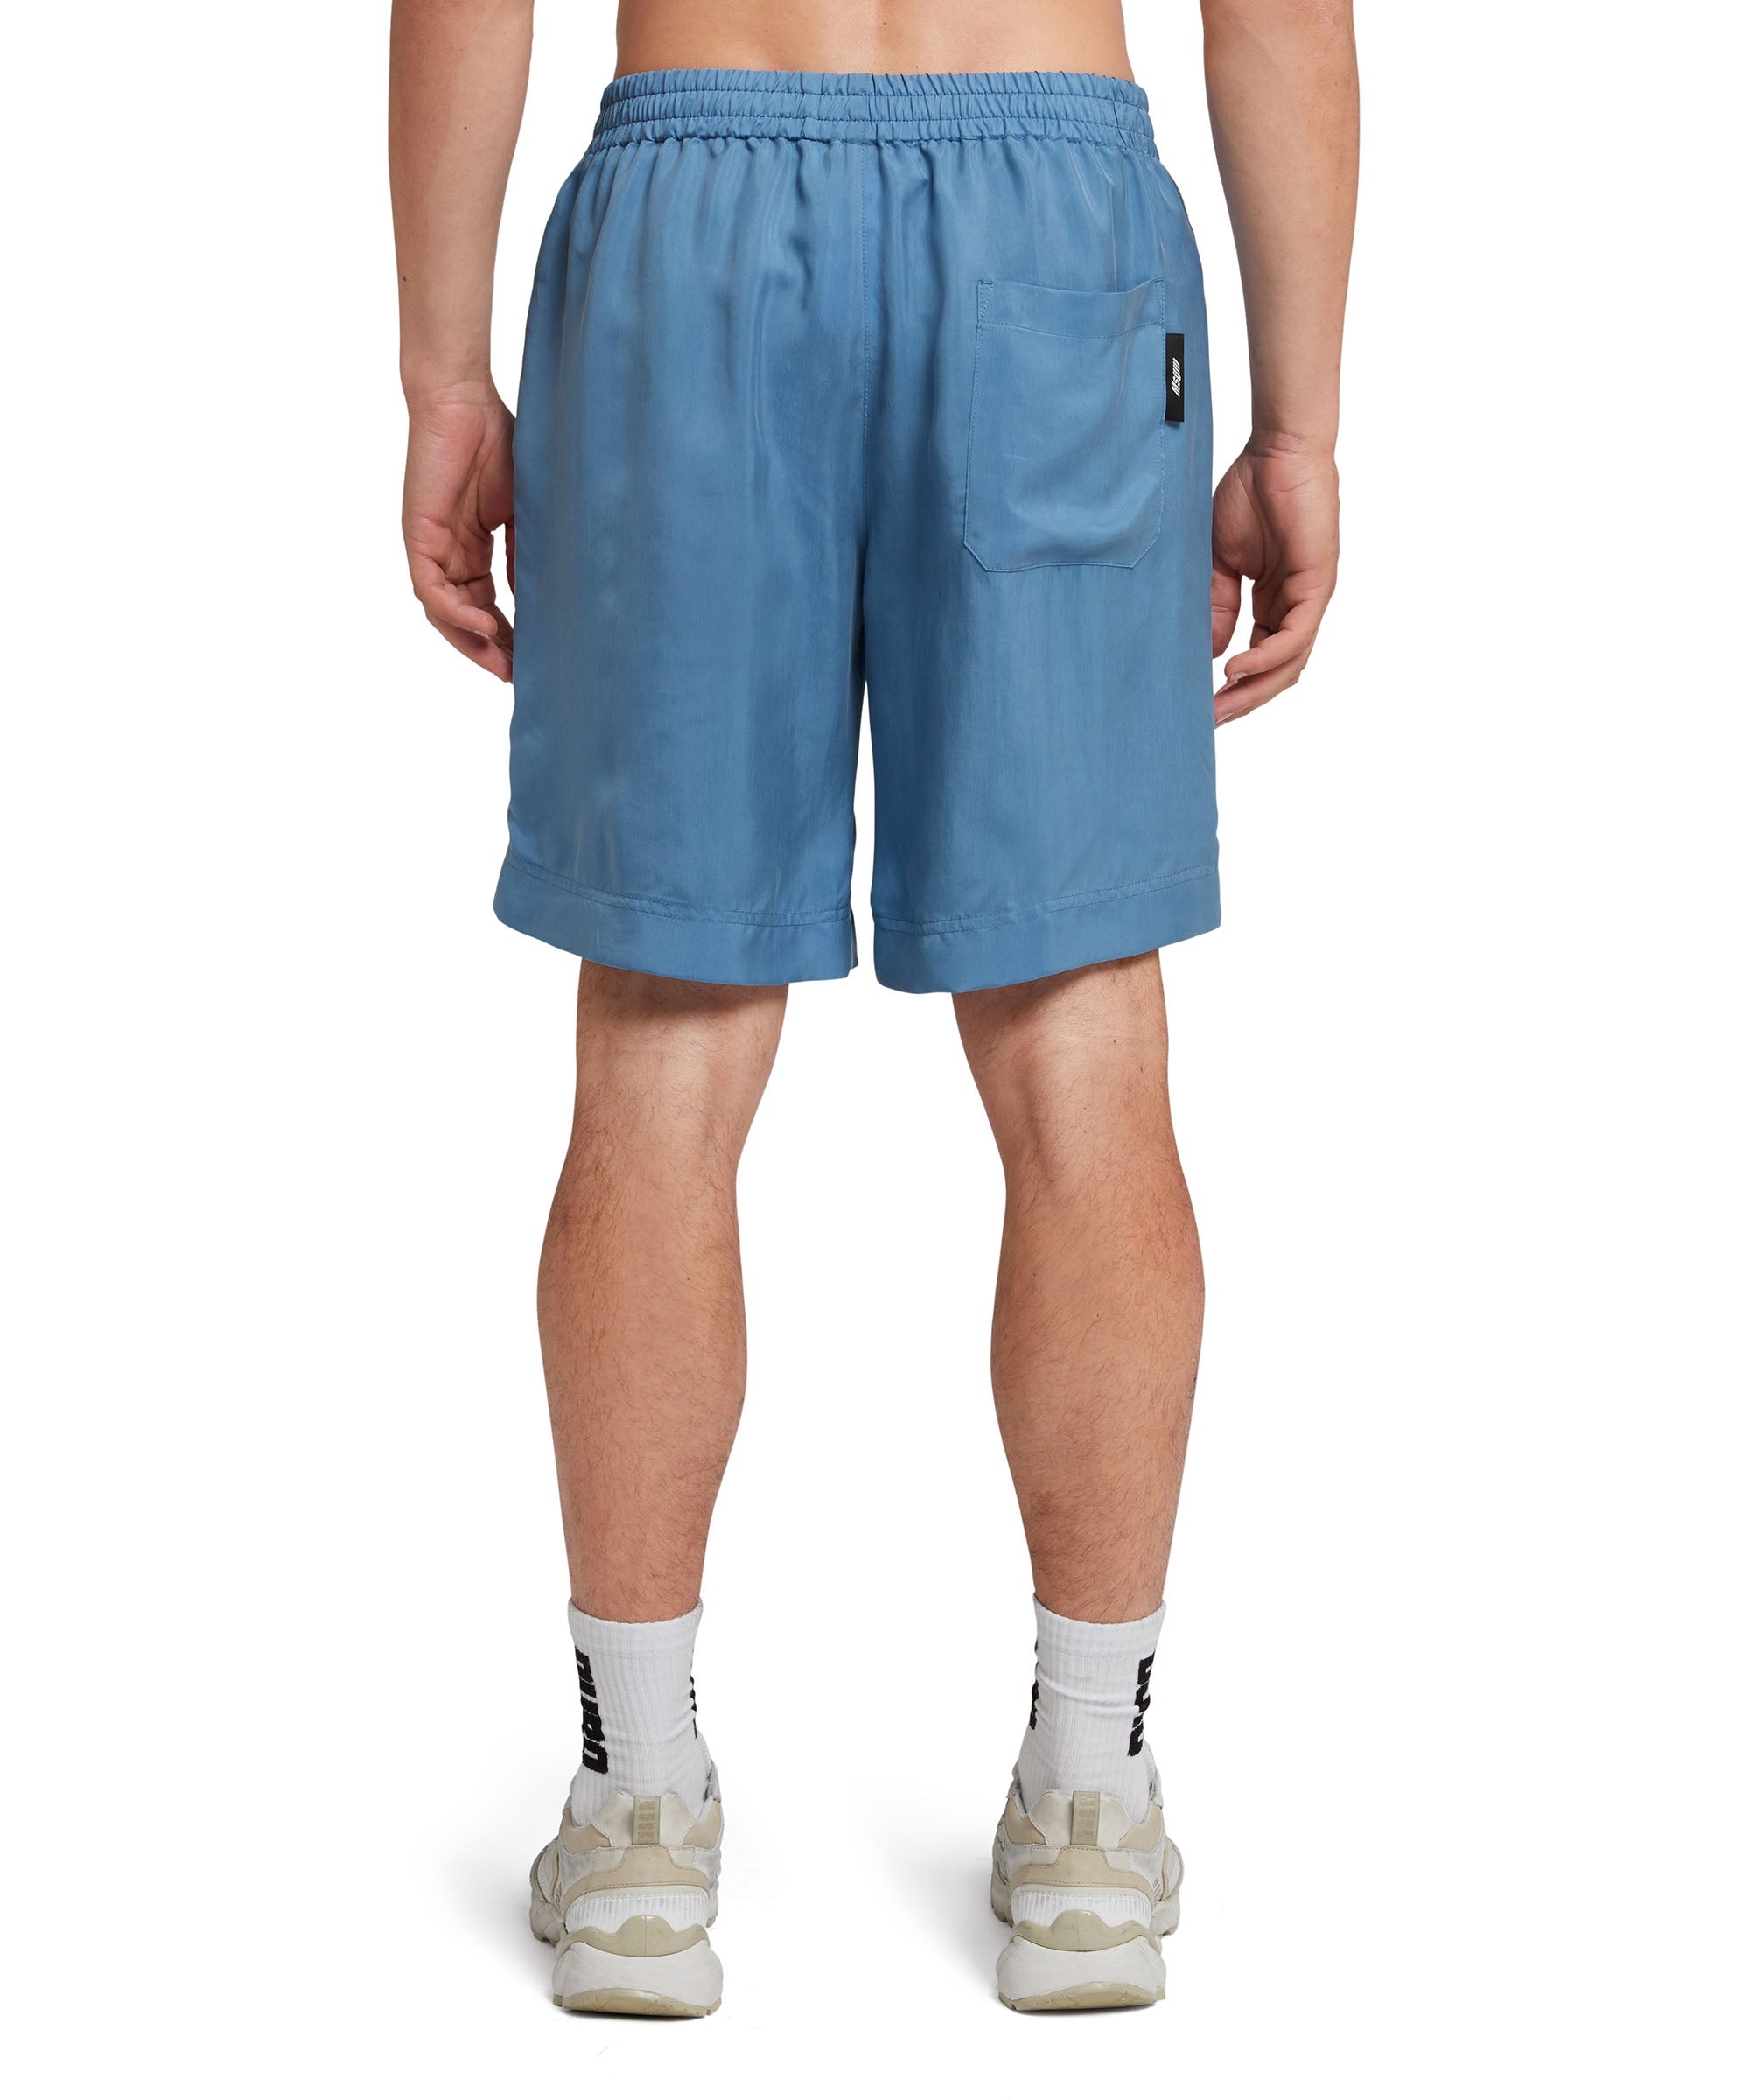 Cupro shorts - 3